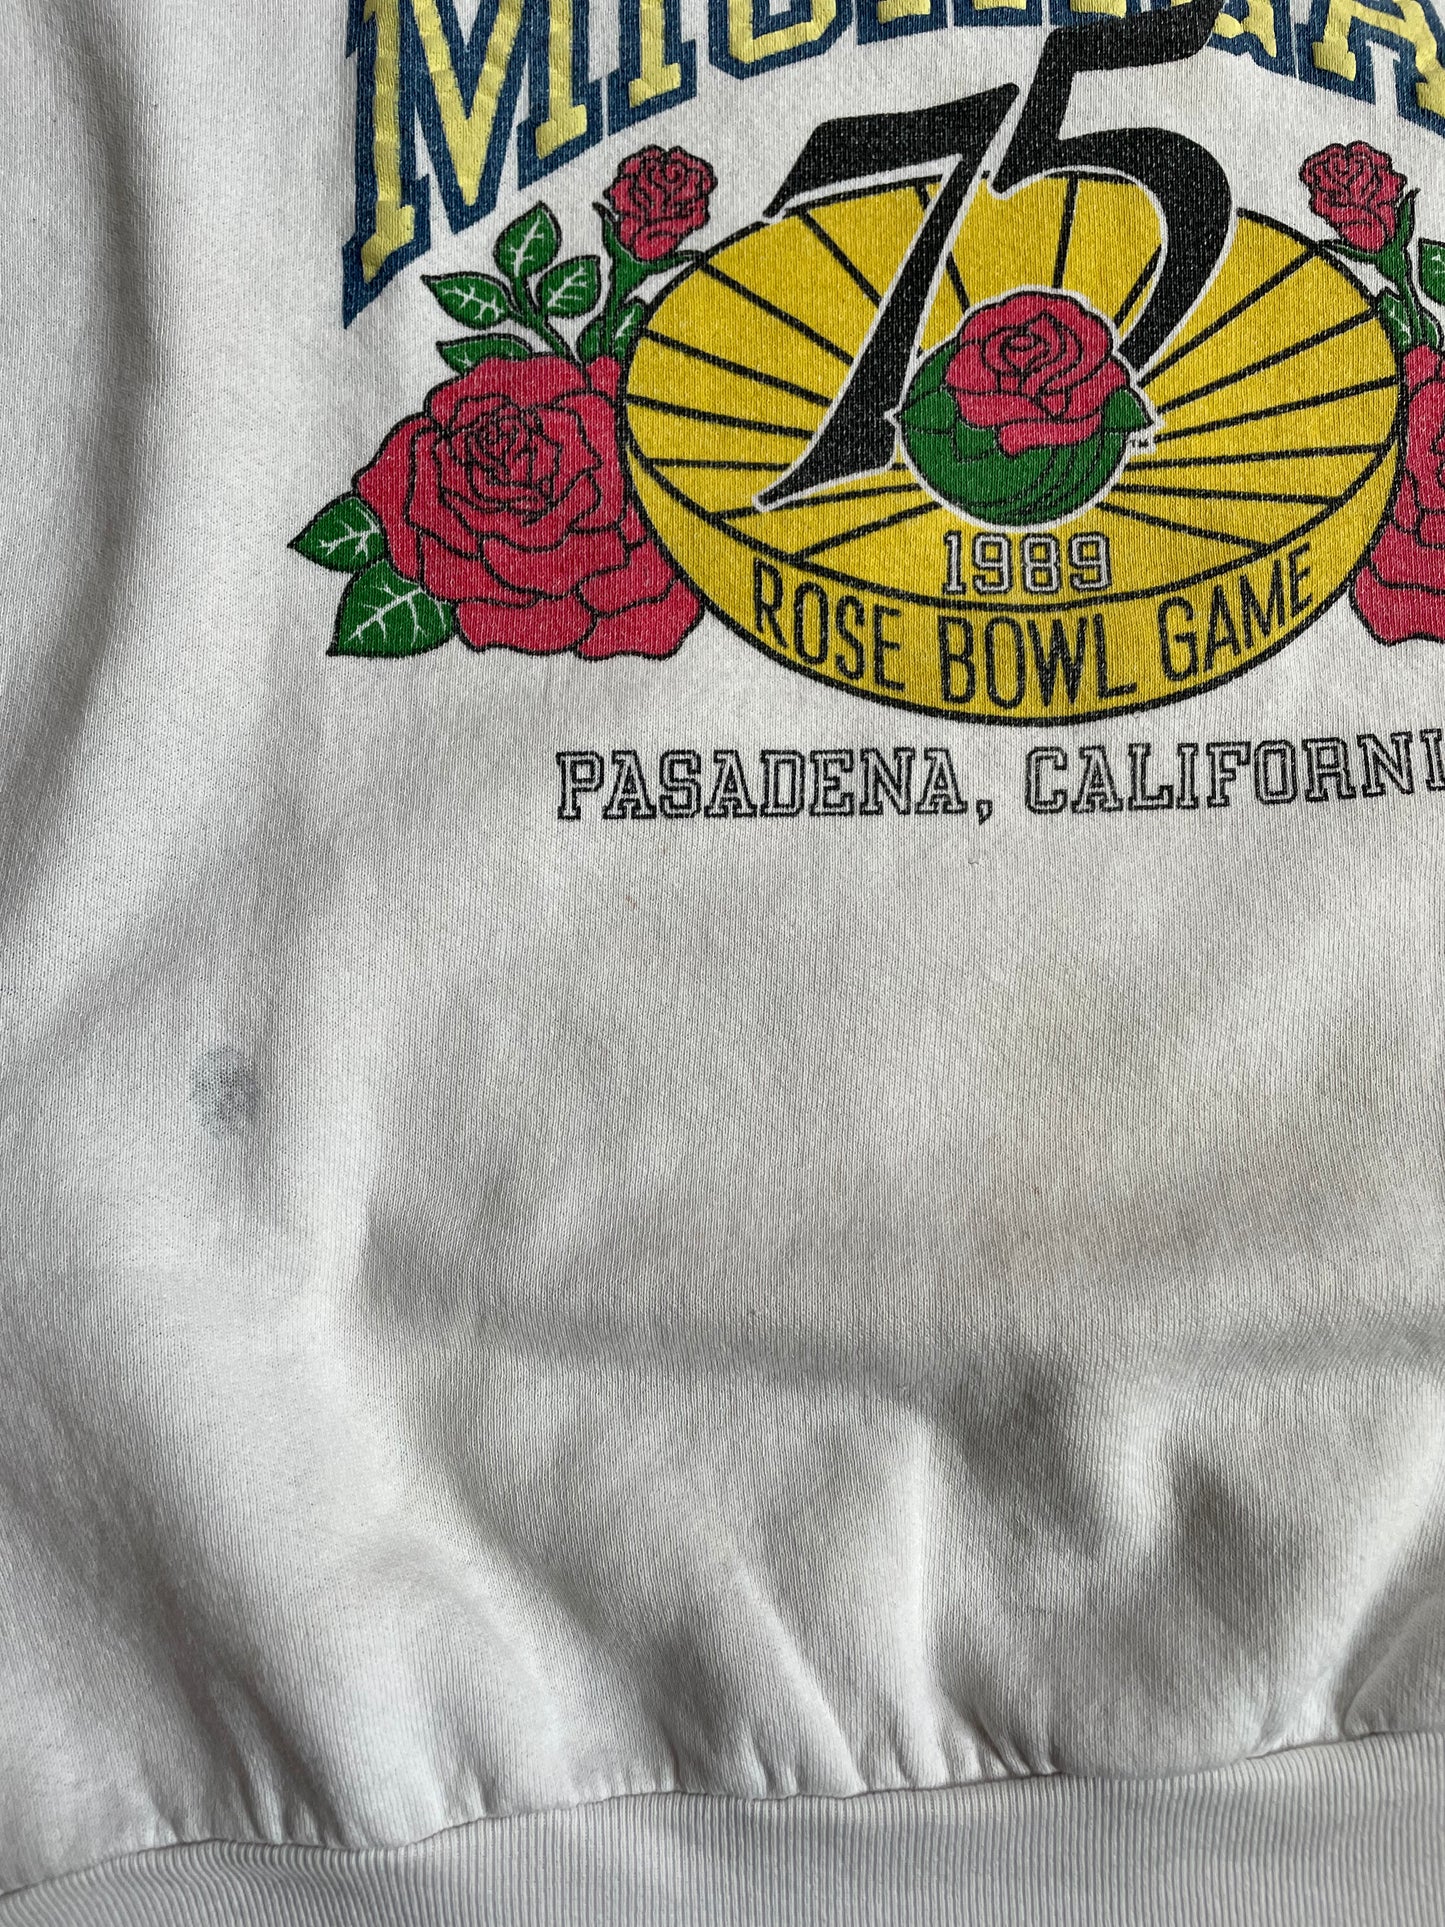 Rare 1989 Rose Bowl Crew